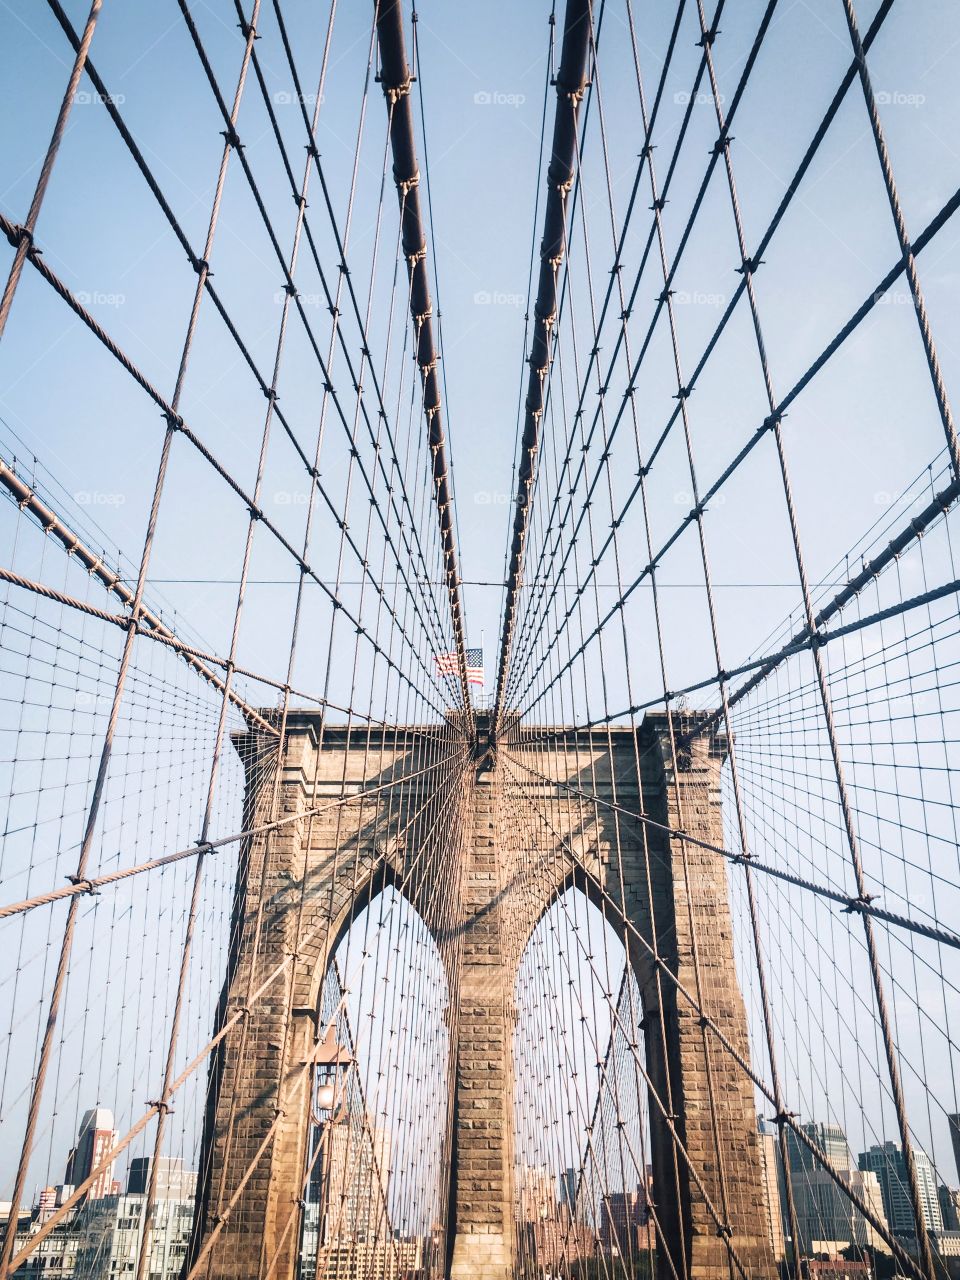 Brooklyn bridge, a New York landmark